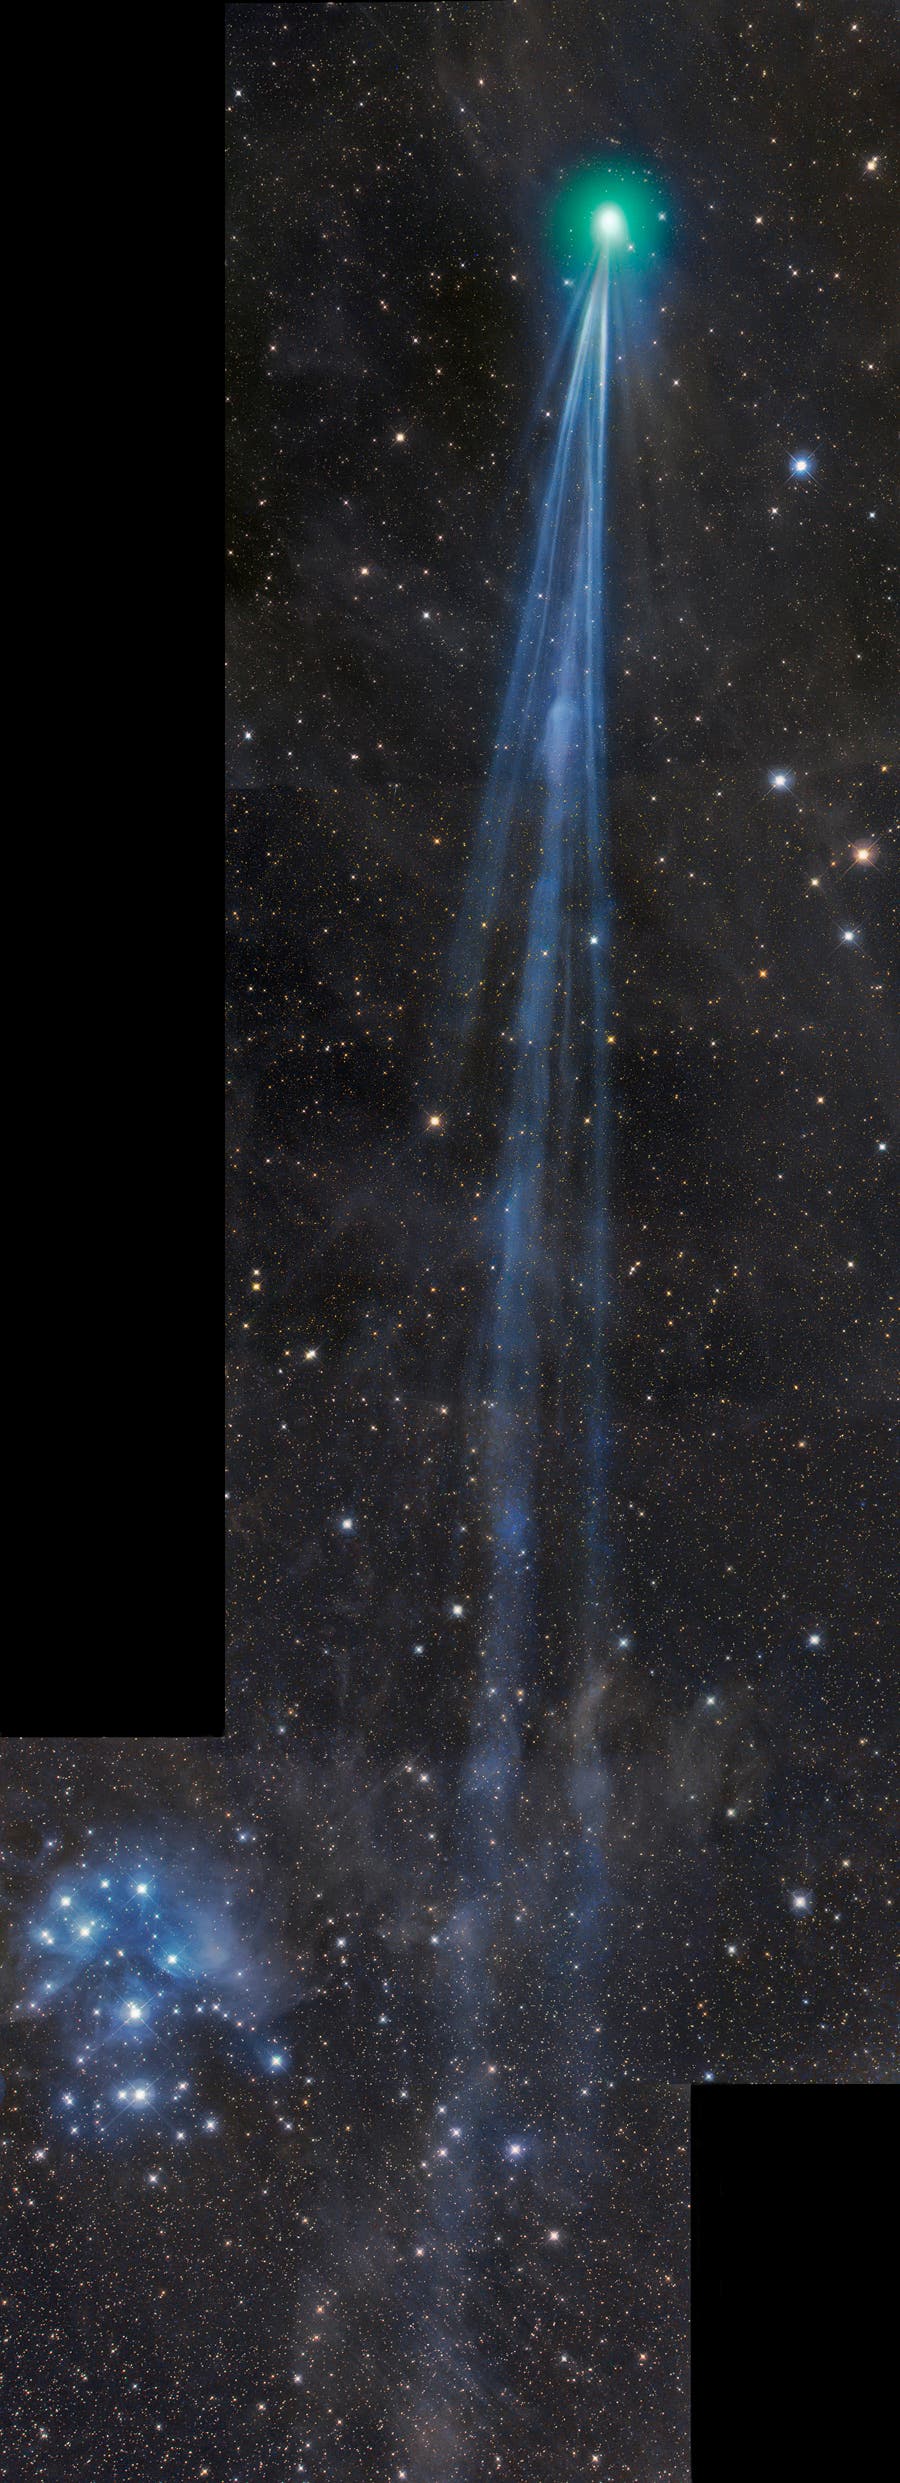 Komet C/2014 Q2 Lovejoy bei Messier 45